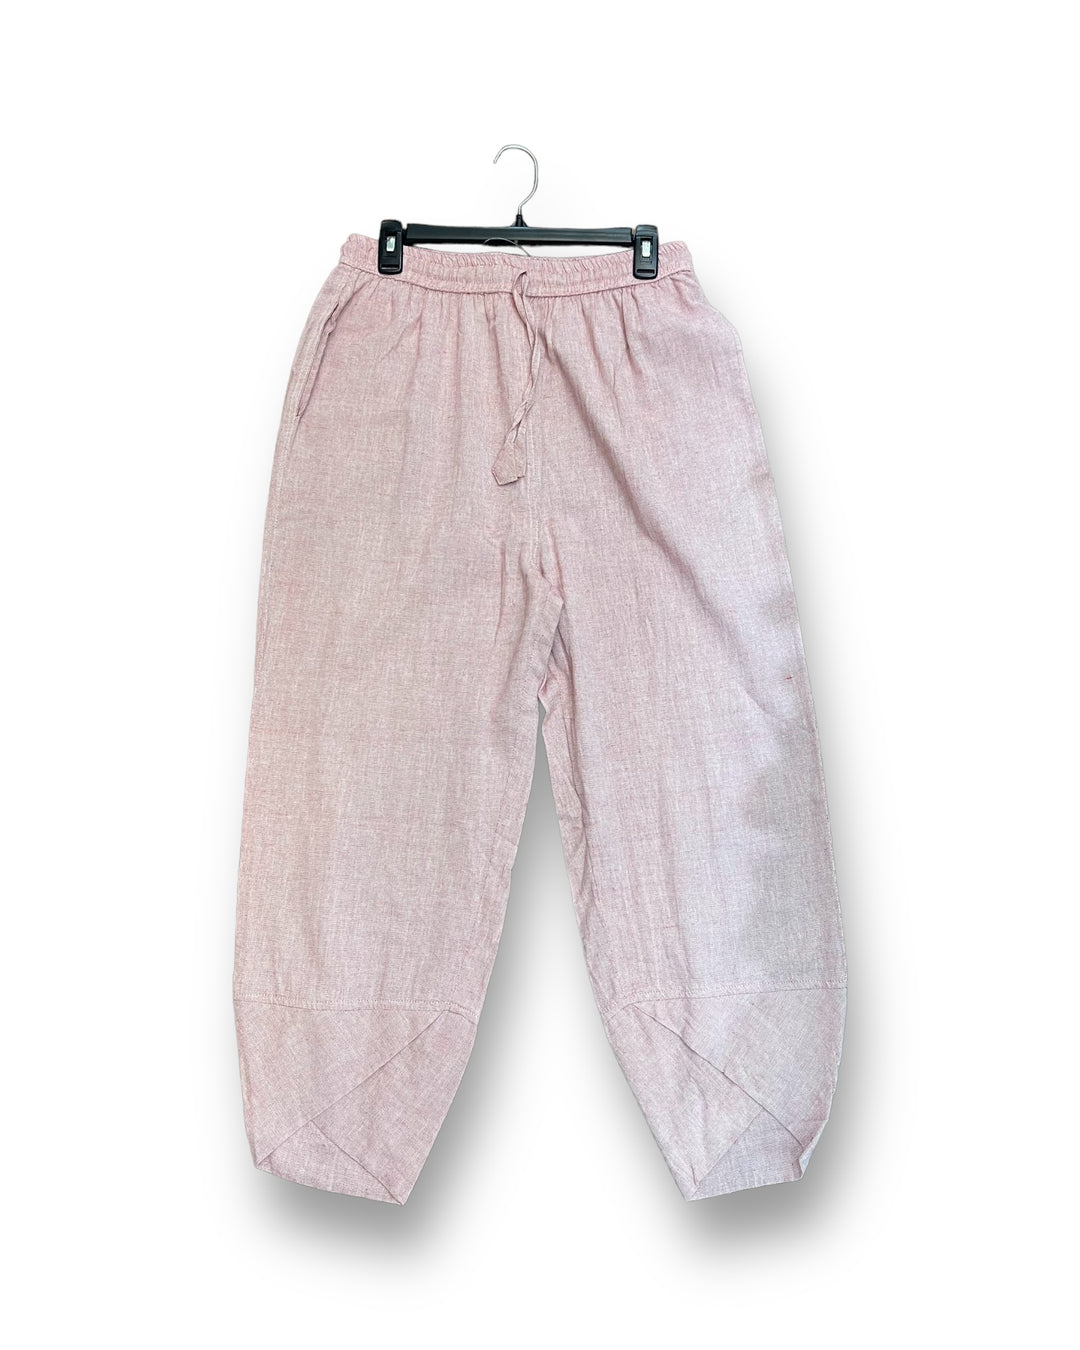 Plain Pants with cross cut